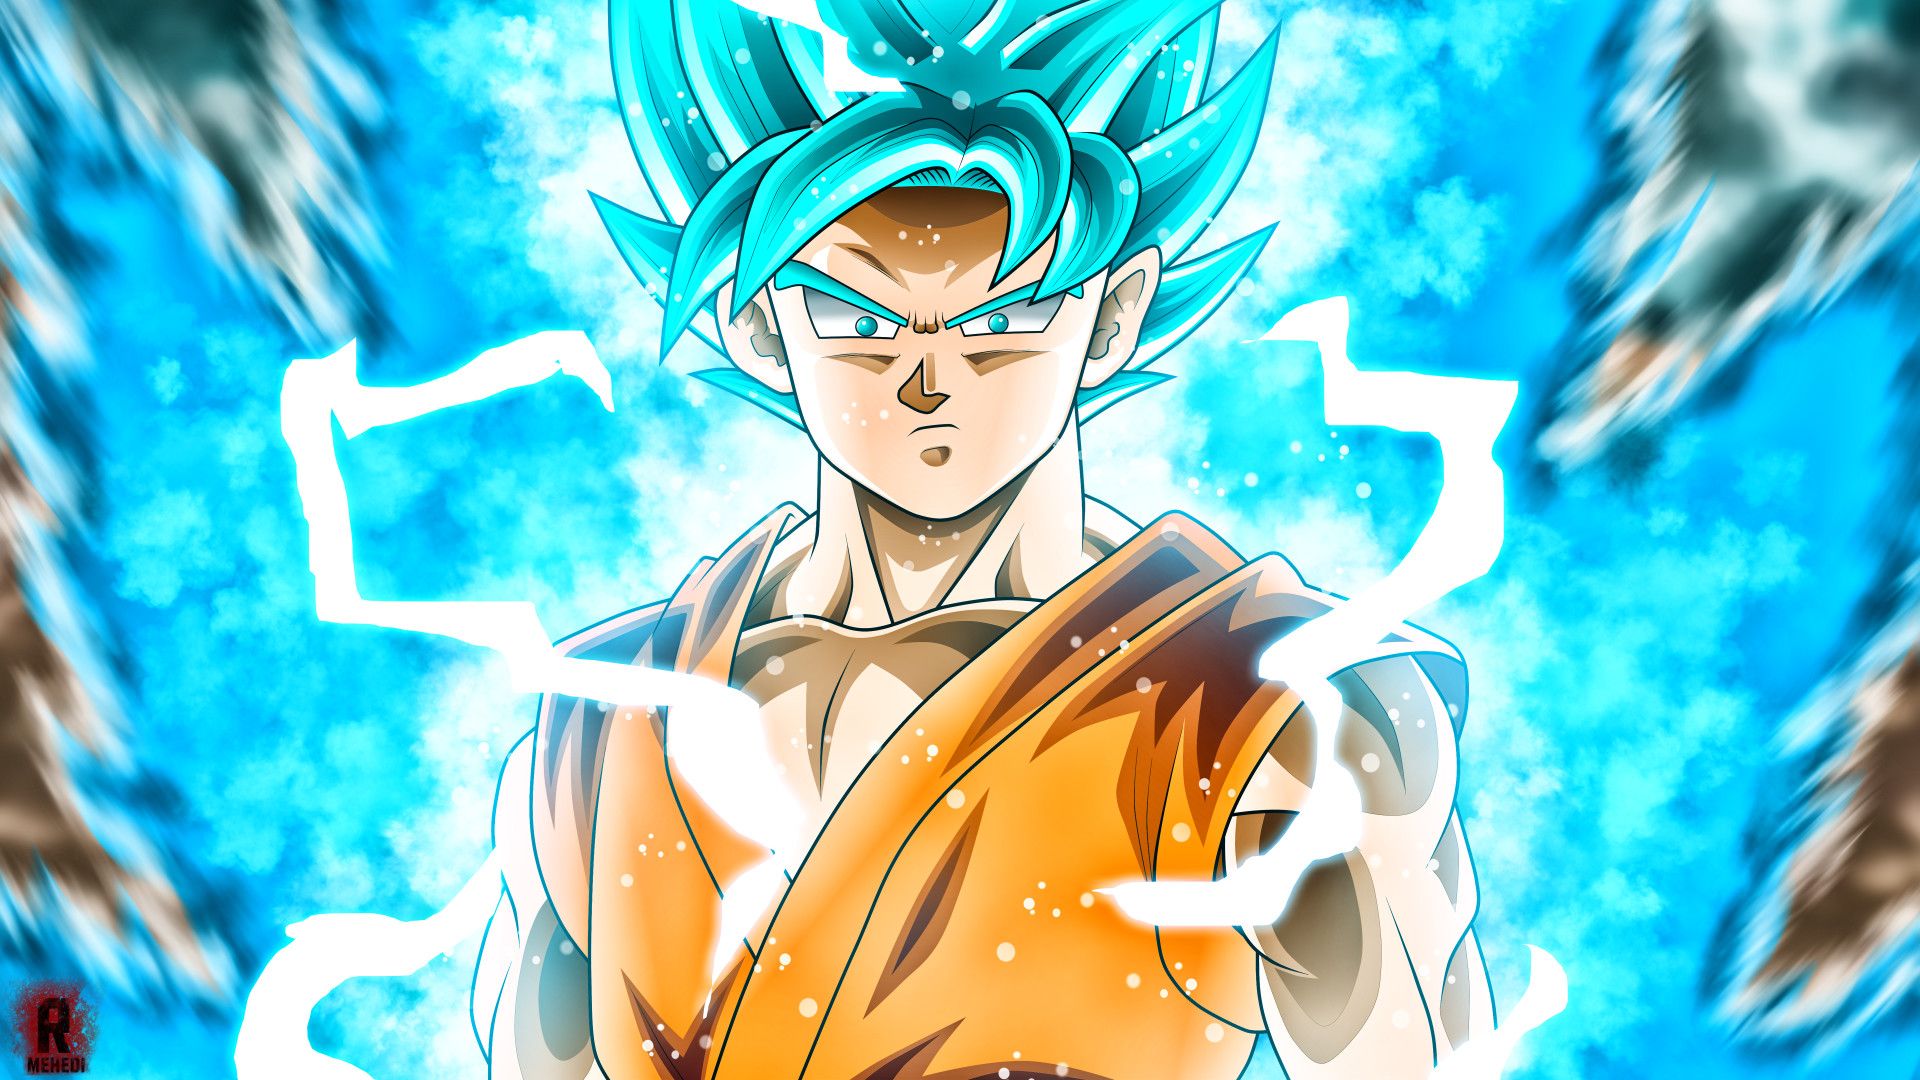 Super Saiyan God Goku Wallpaper